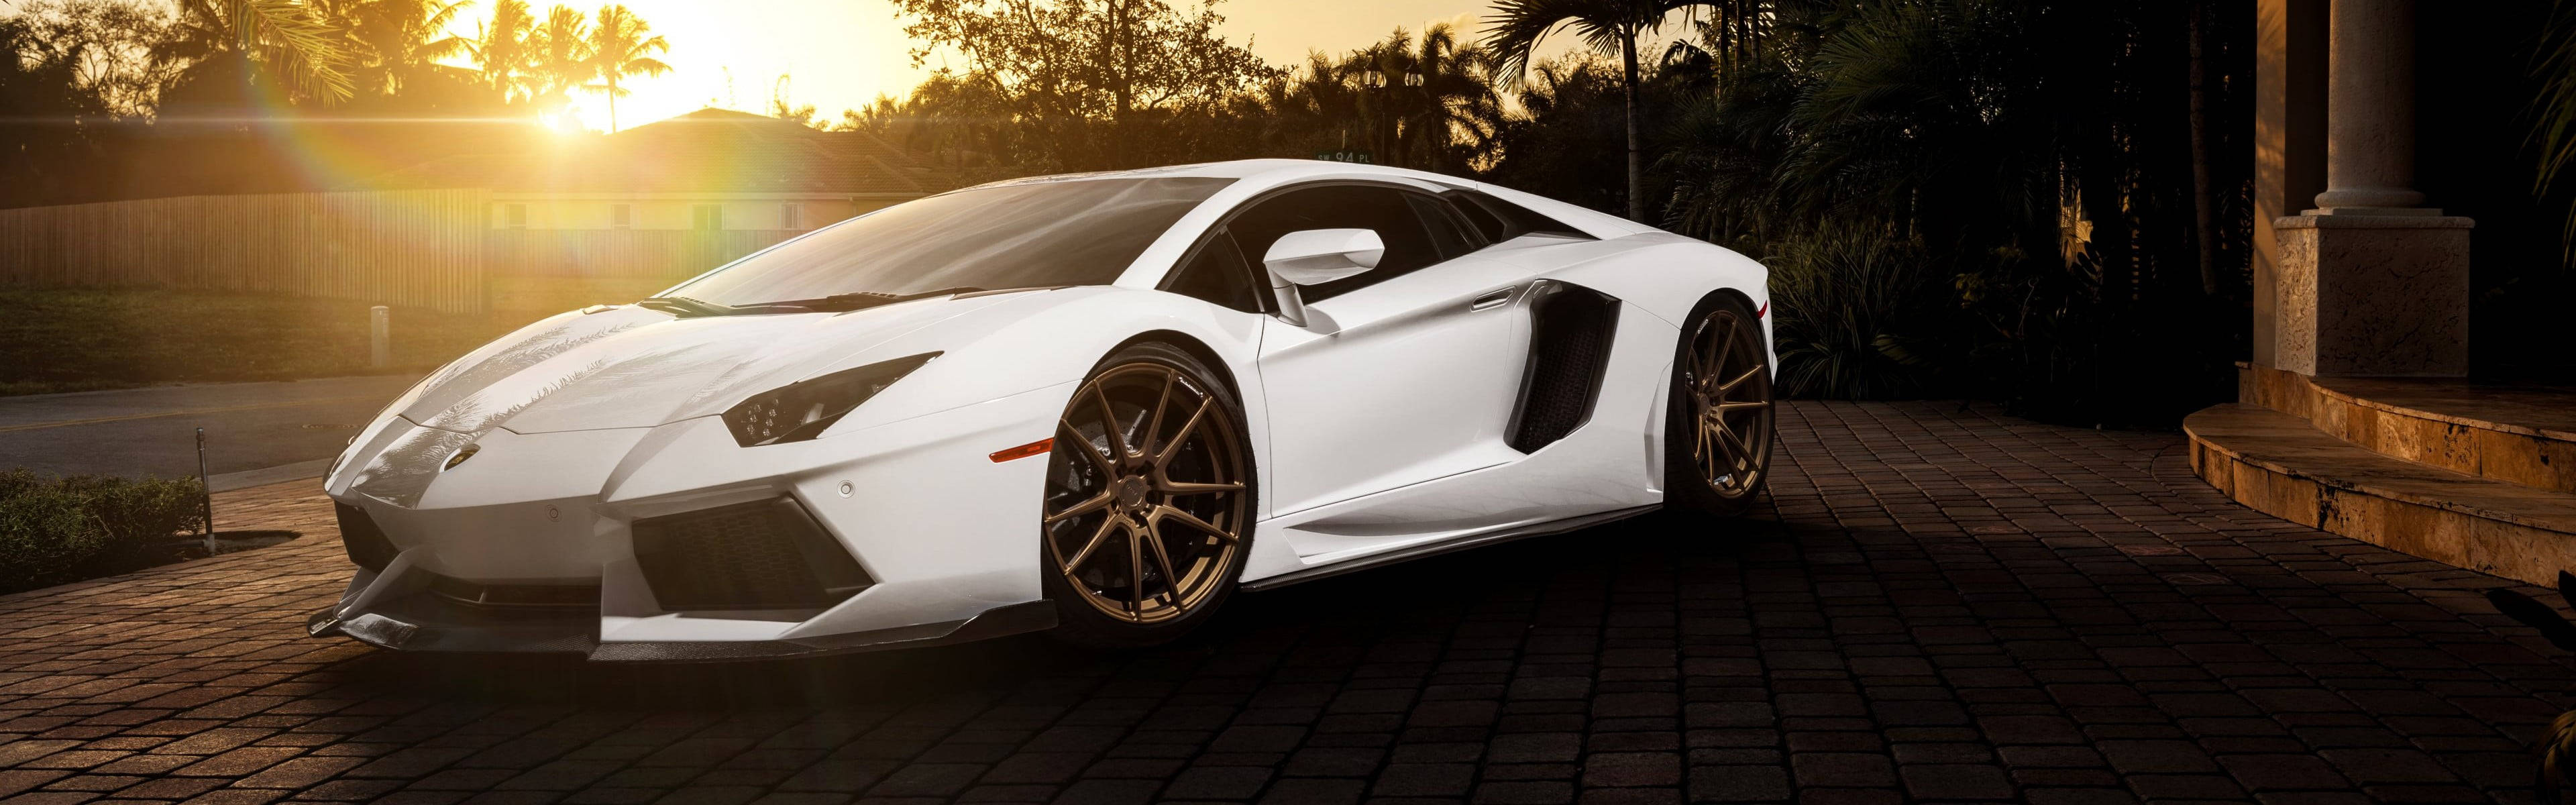 Caption: Unleashed Luxury - Lamborghini Aventador Sports Car Wallpaper